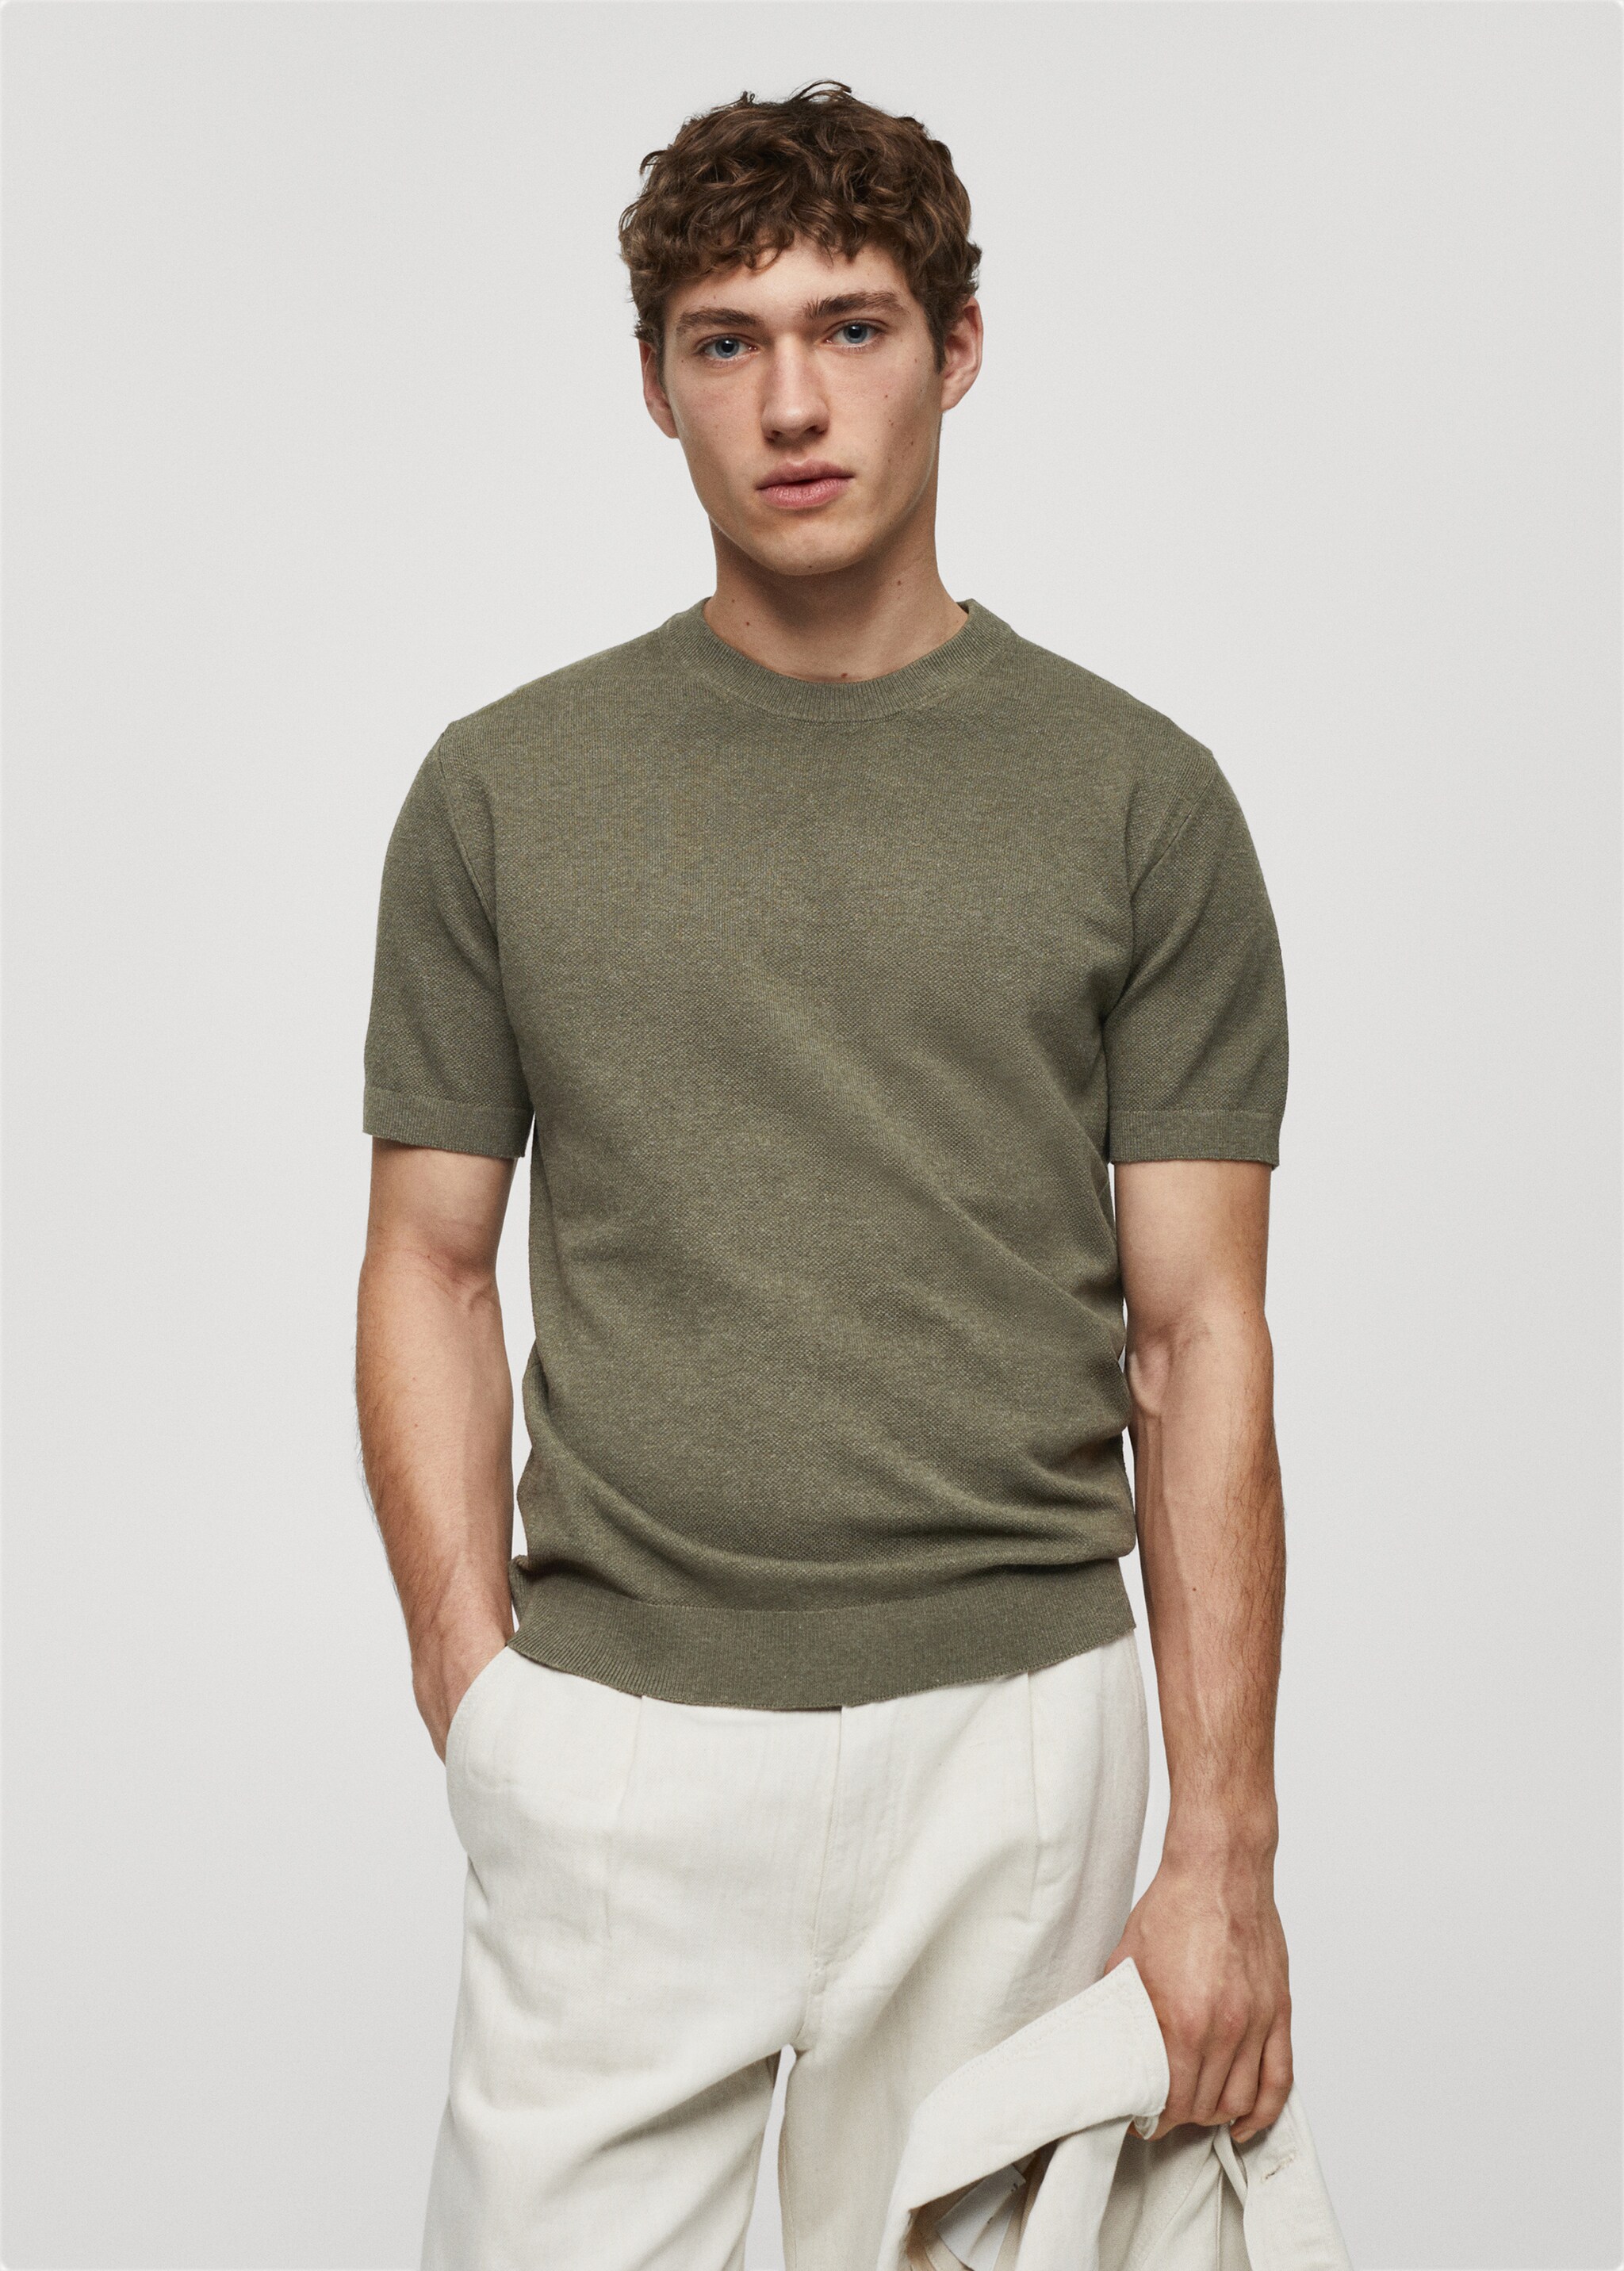 Structured cotton knit t-shirt - Medium plane